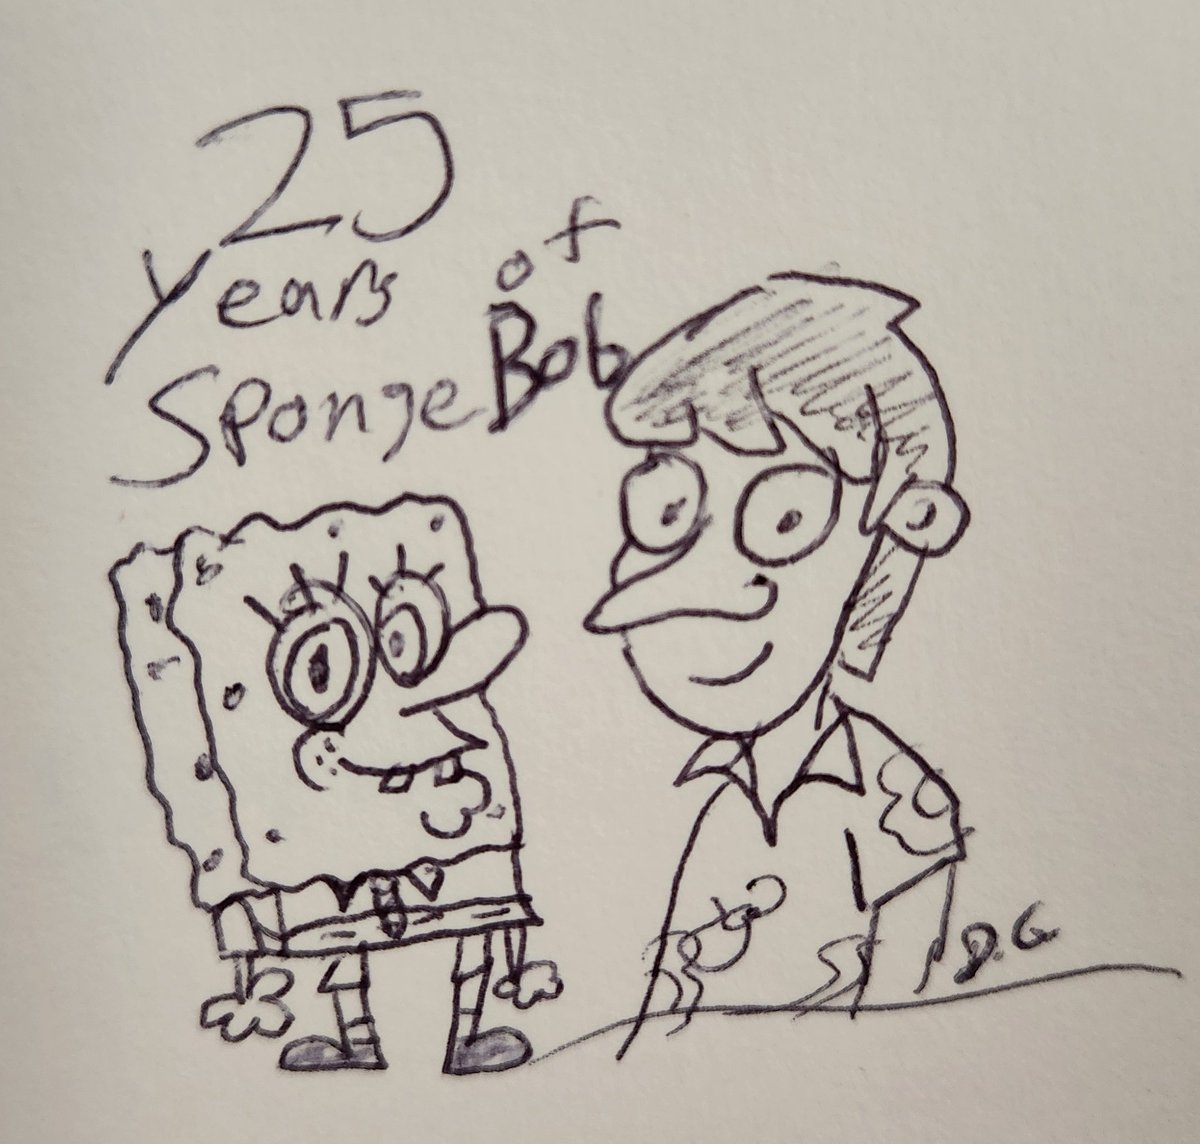 A doodle to celebrate 25 years of SpongeBob: the sponge man himself with his creator, the late Stephen Hillenburg. #SpongeBobSquarePants #Spongebob25 #fanart #art #drawing #Nickelodeon #nicktoons